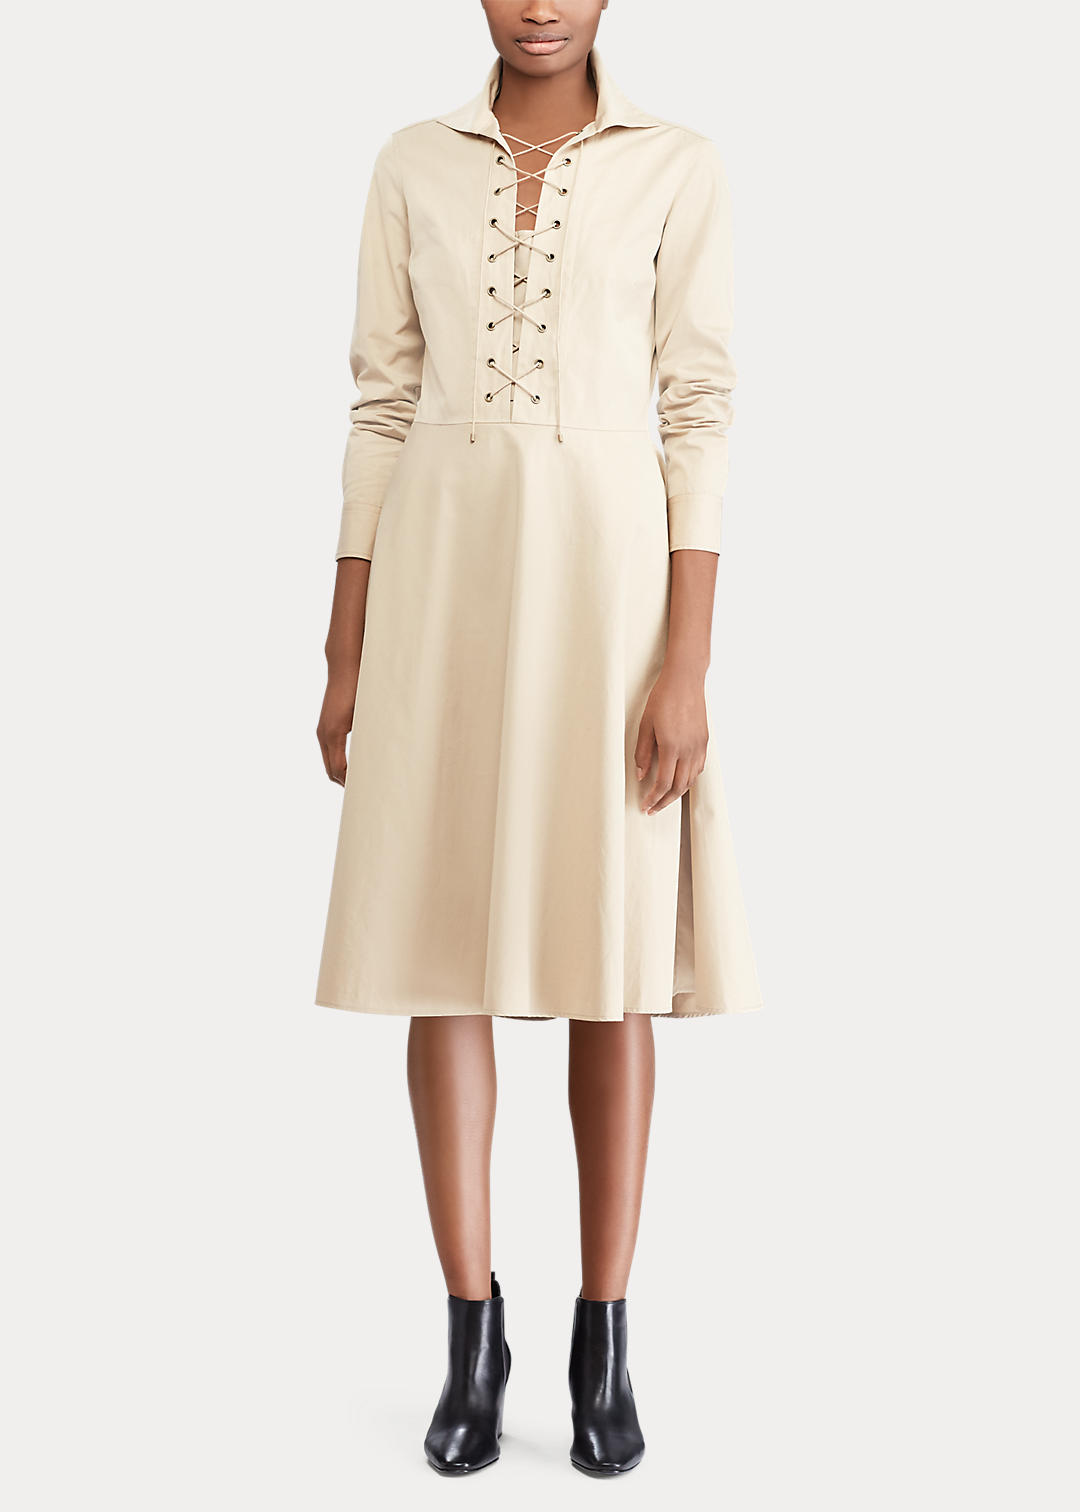 Polo Ralph Lauren Lace-Up Cotton Poplin Dress 2